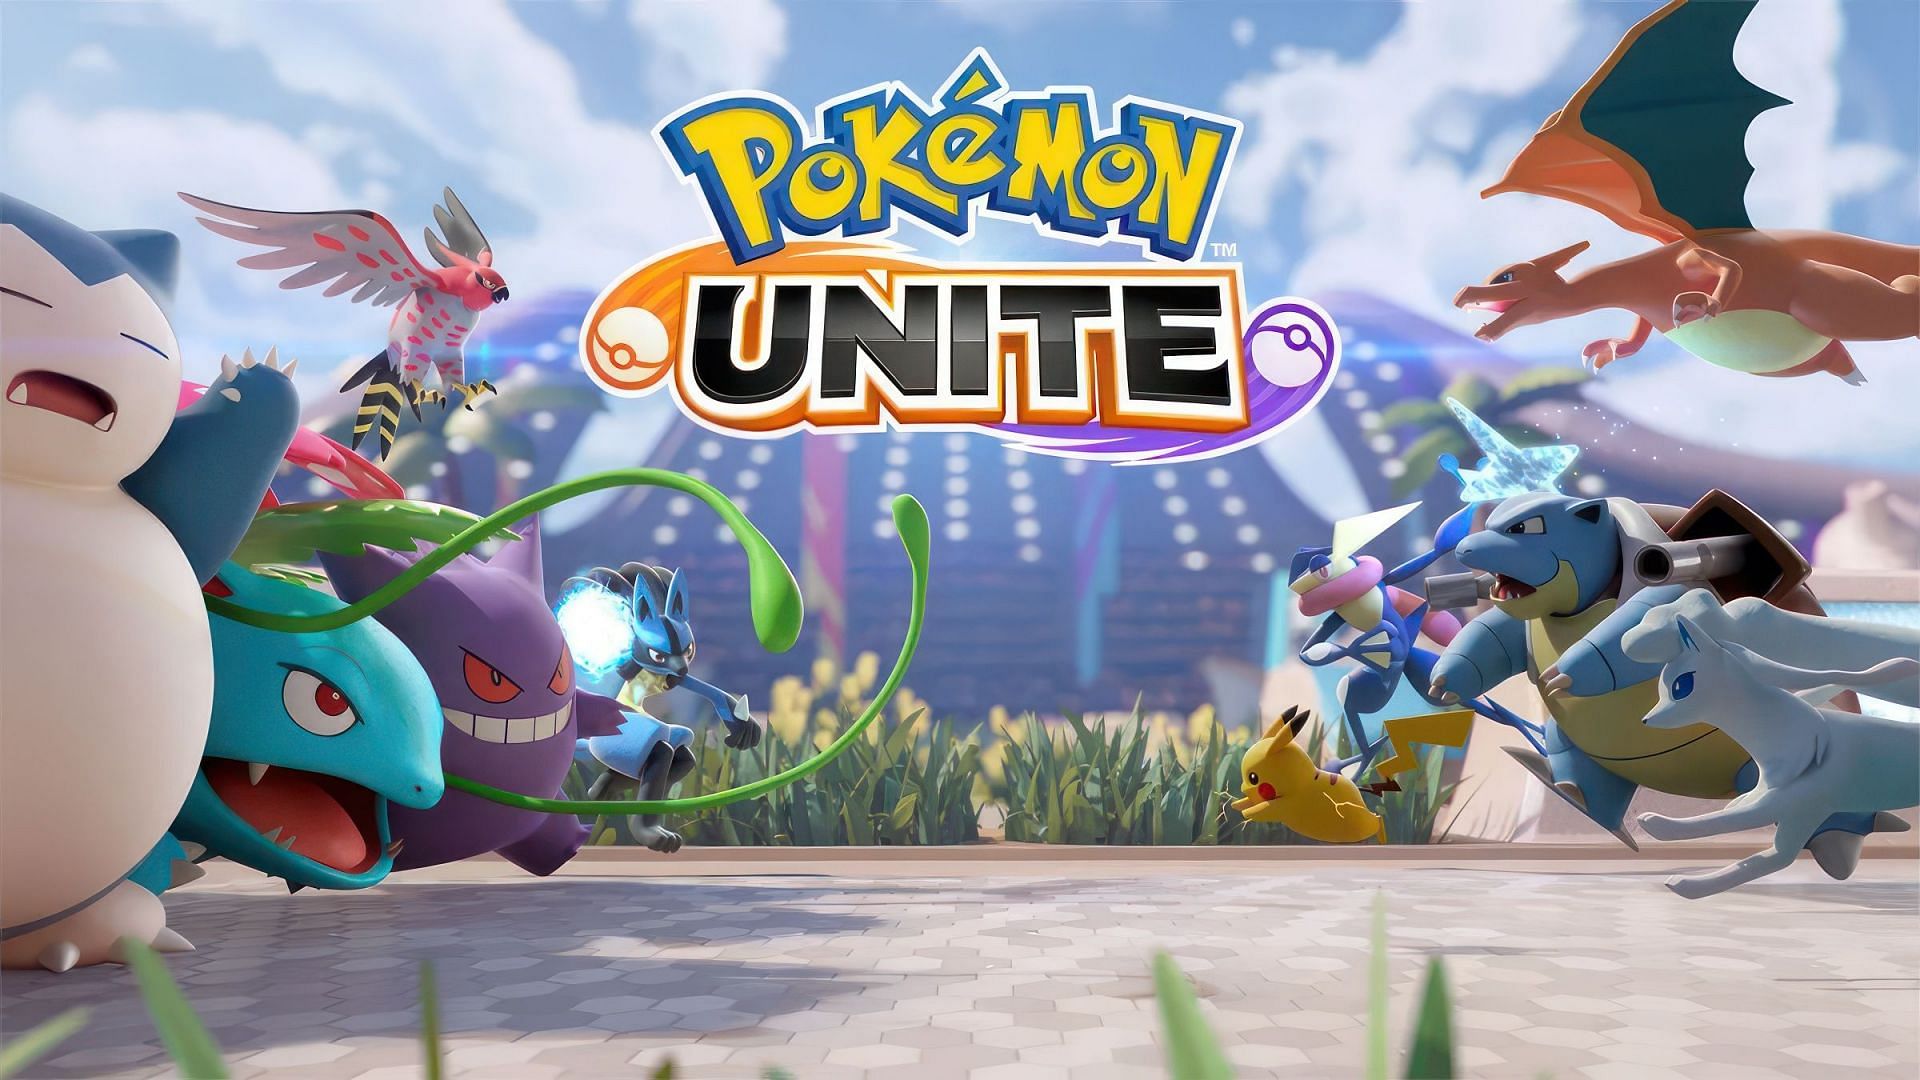 Mewtwo Y Moves Overview  Pokémon UNITE 